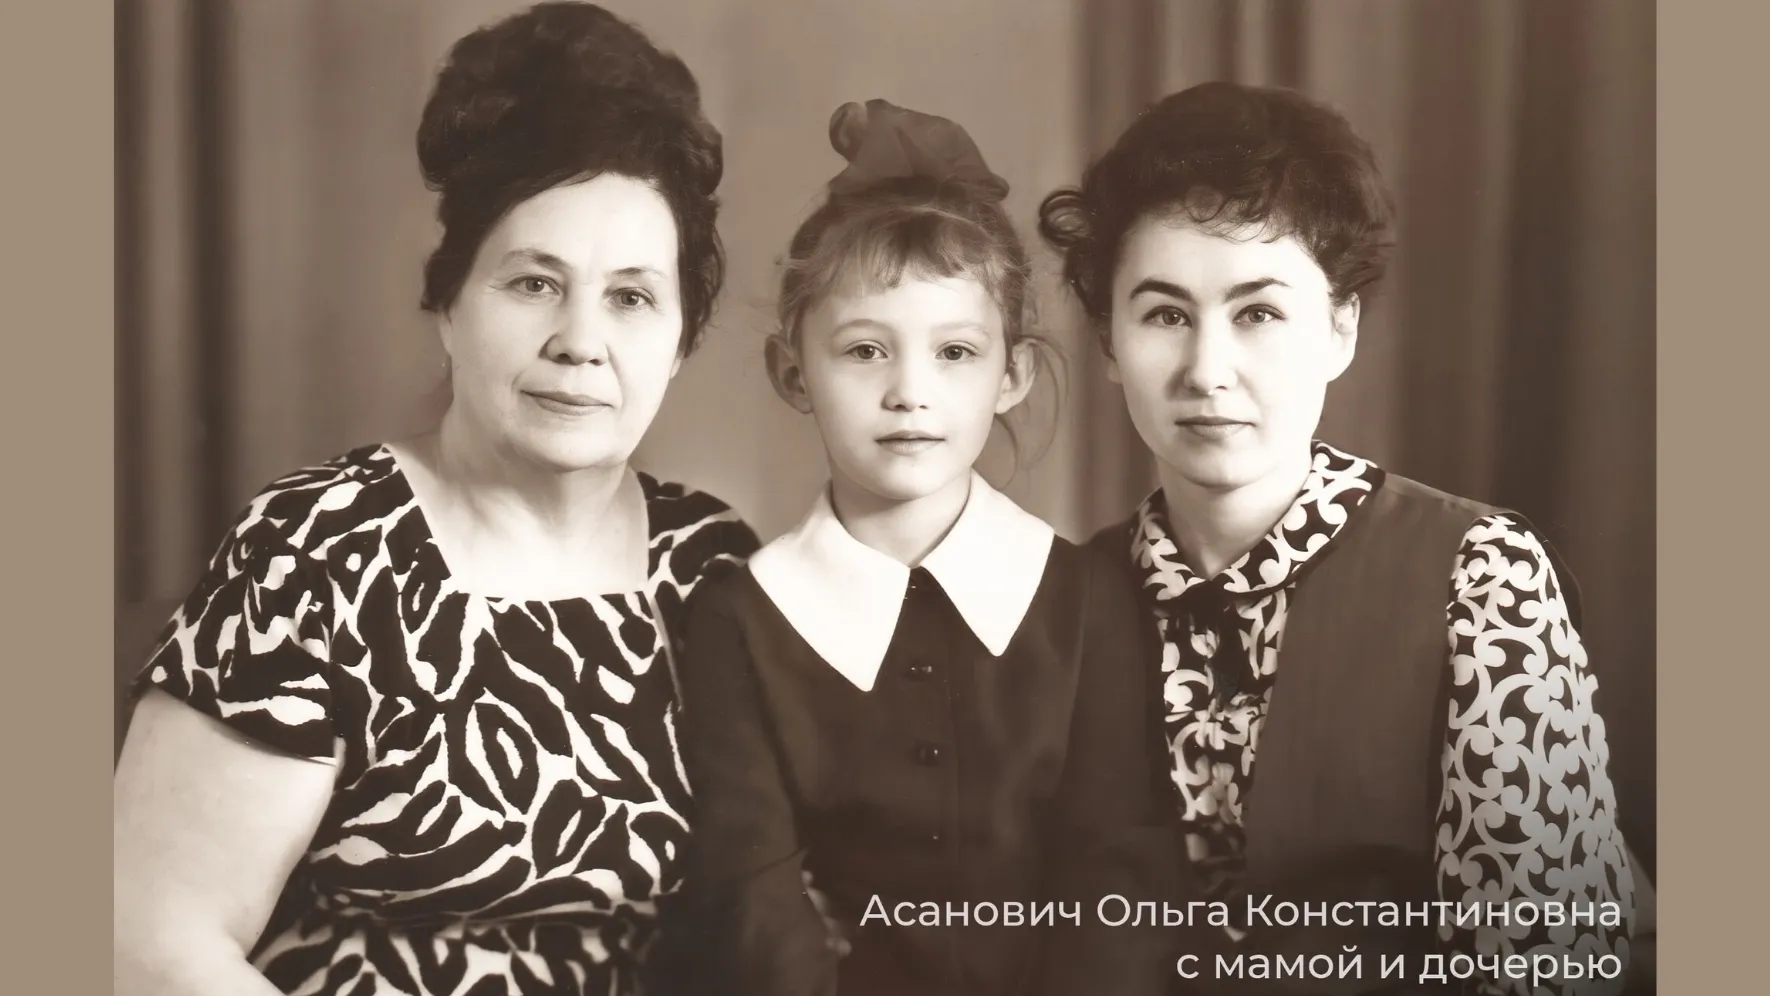 Ольга Константиновна Асанович с мамой и дочерью. Фото: vk.com/artyukhov_da